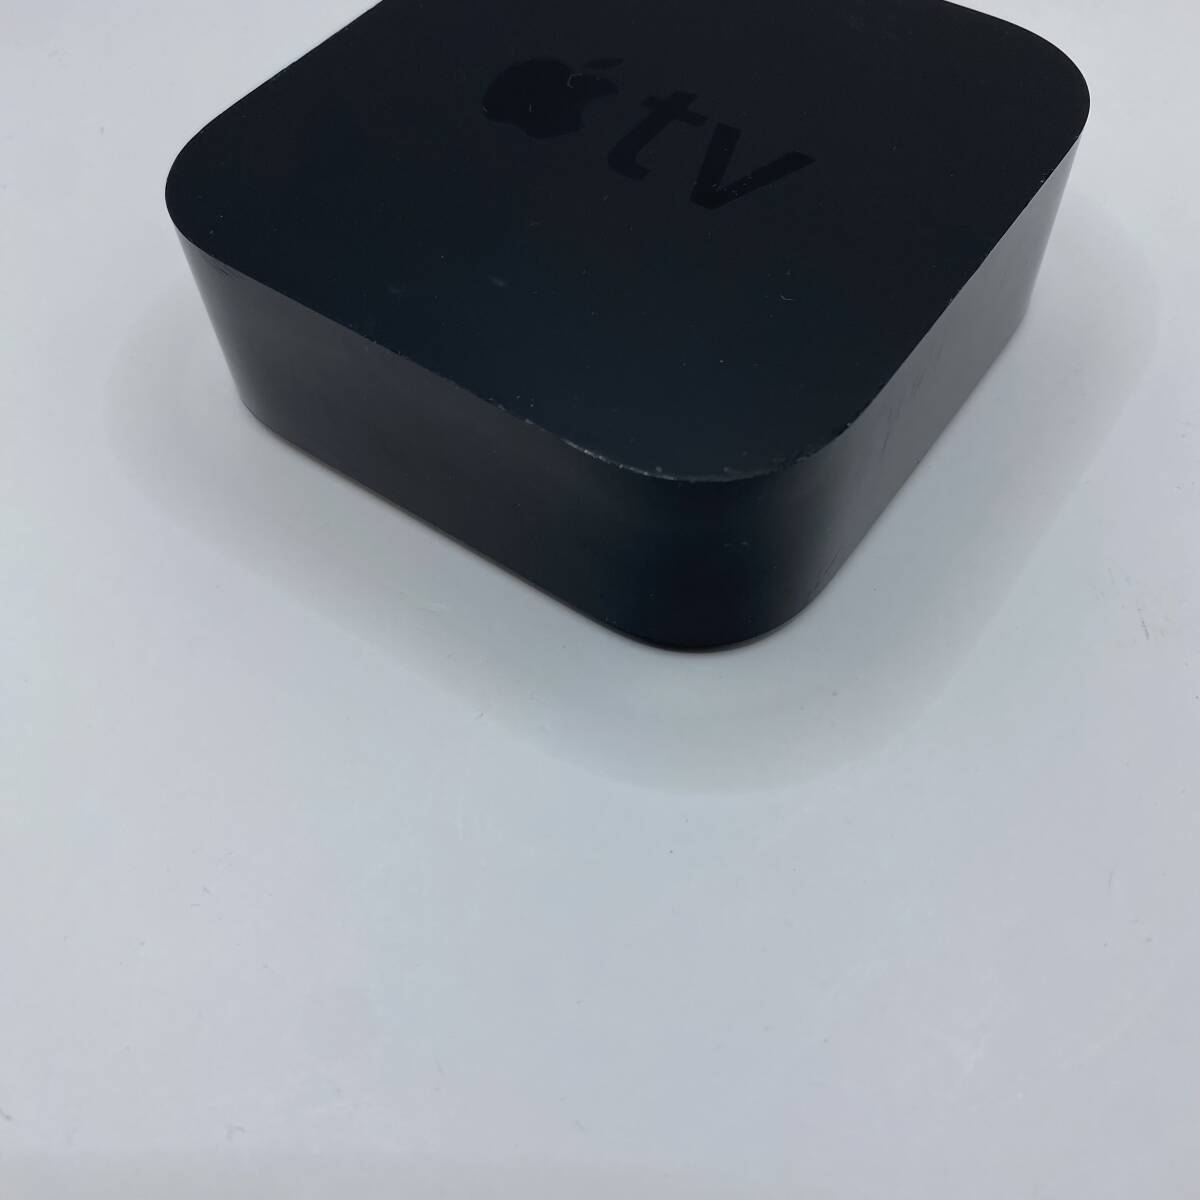  no. 4 generation AppleTV MGY52J/A